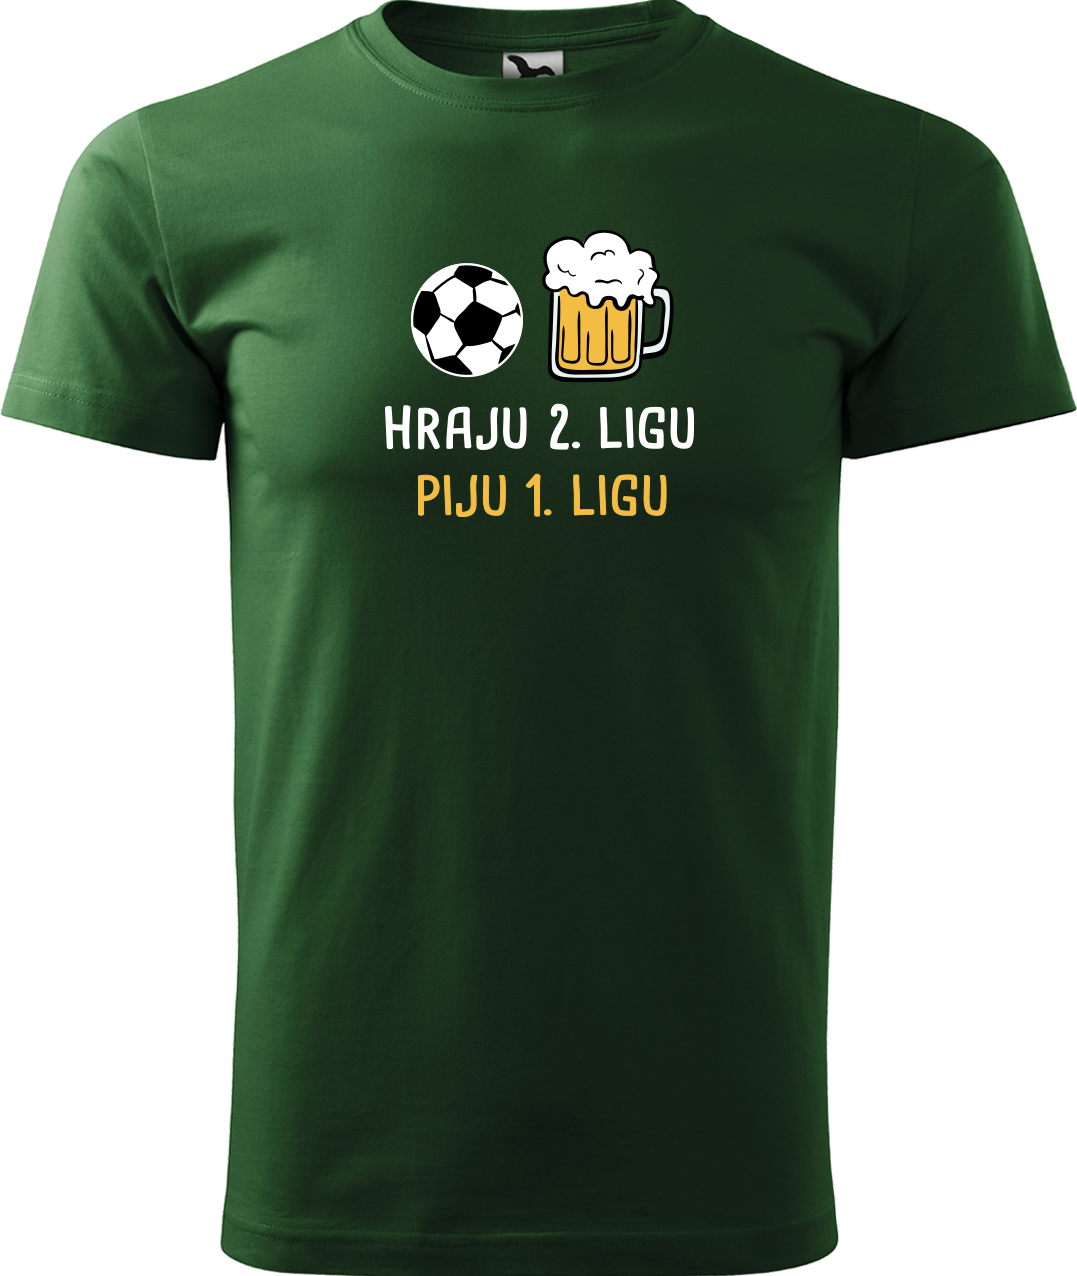 Tričko pro fotbalistu - Piju 1. ligu Velikost: L, Barva: Lahvově zelená (06)